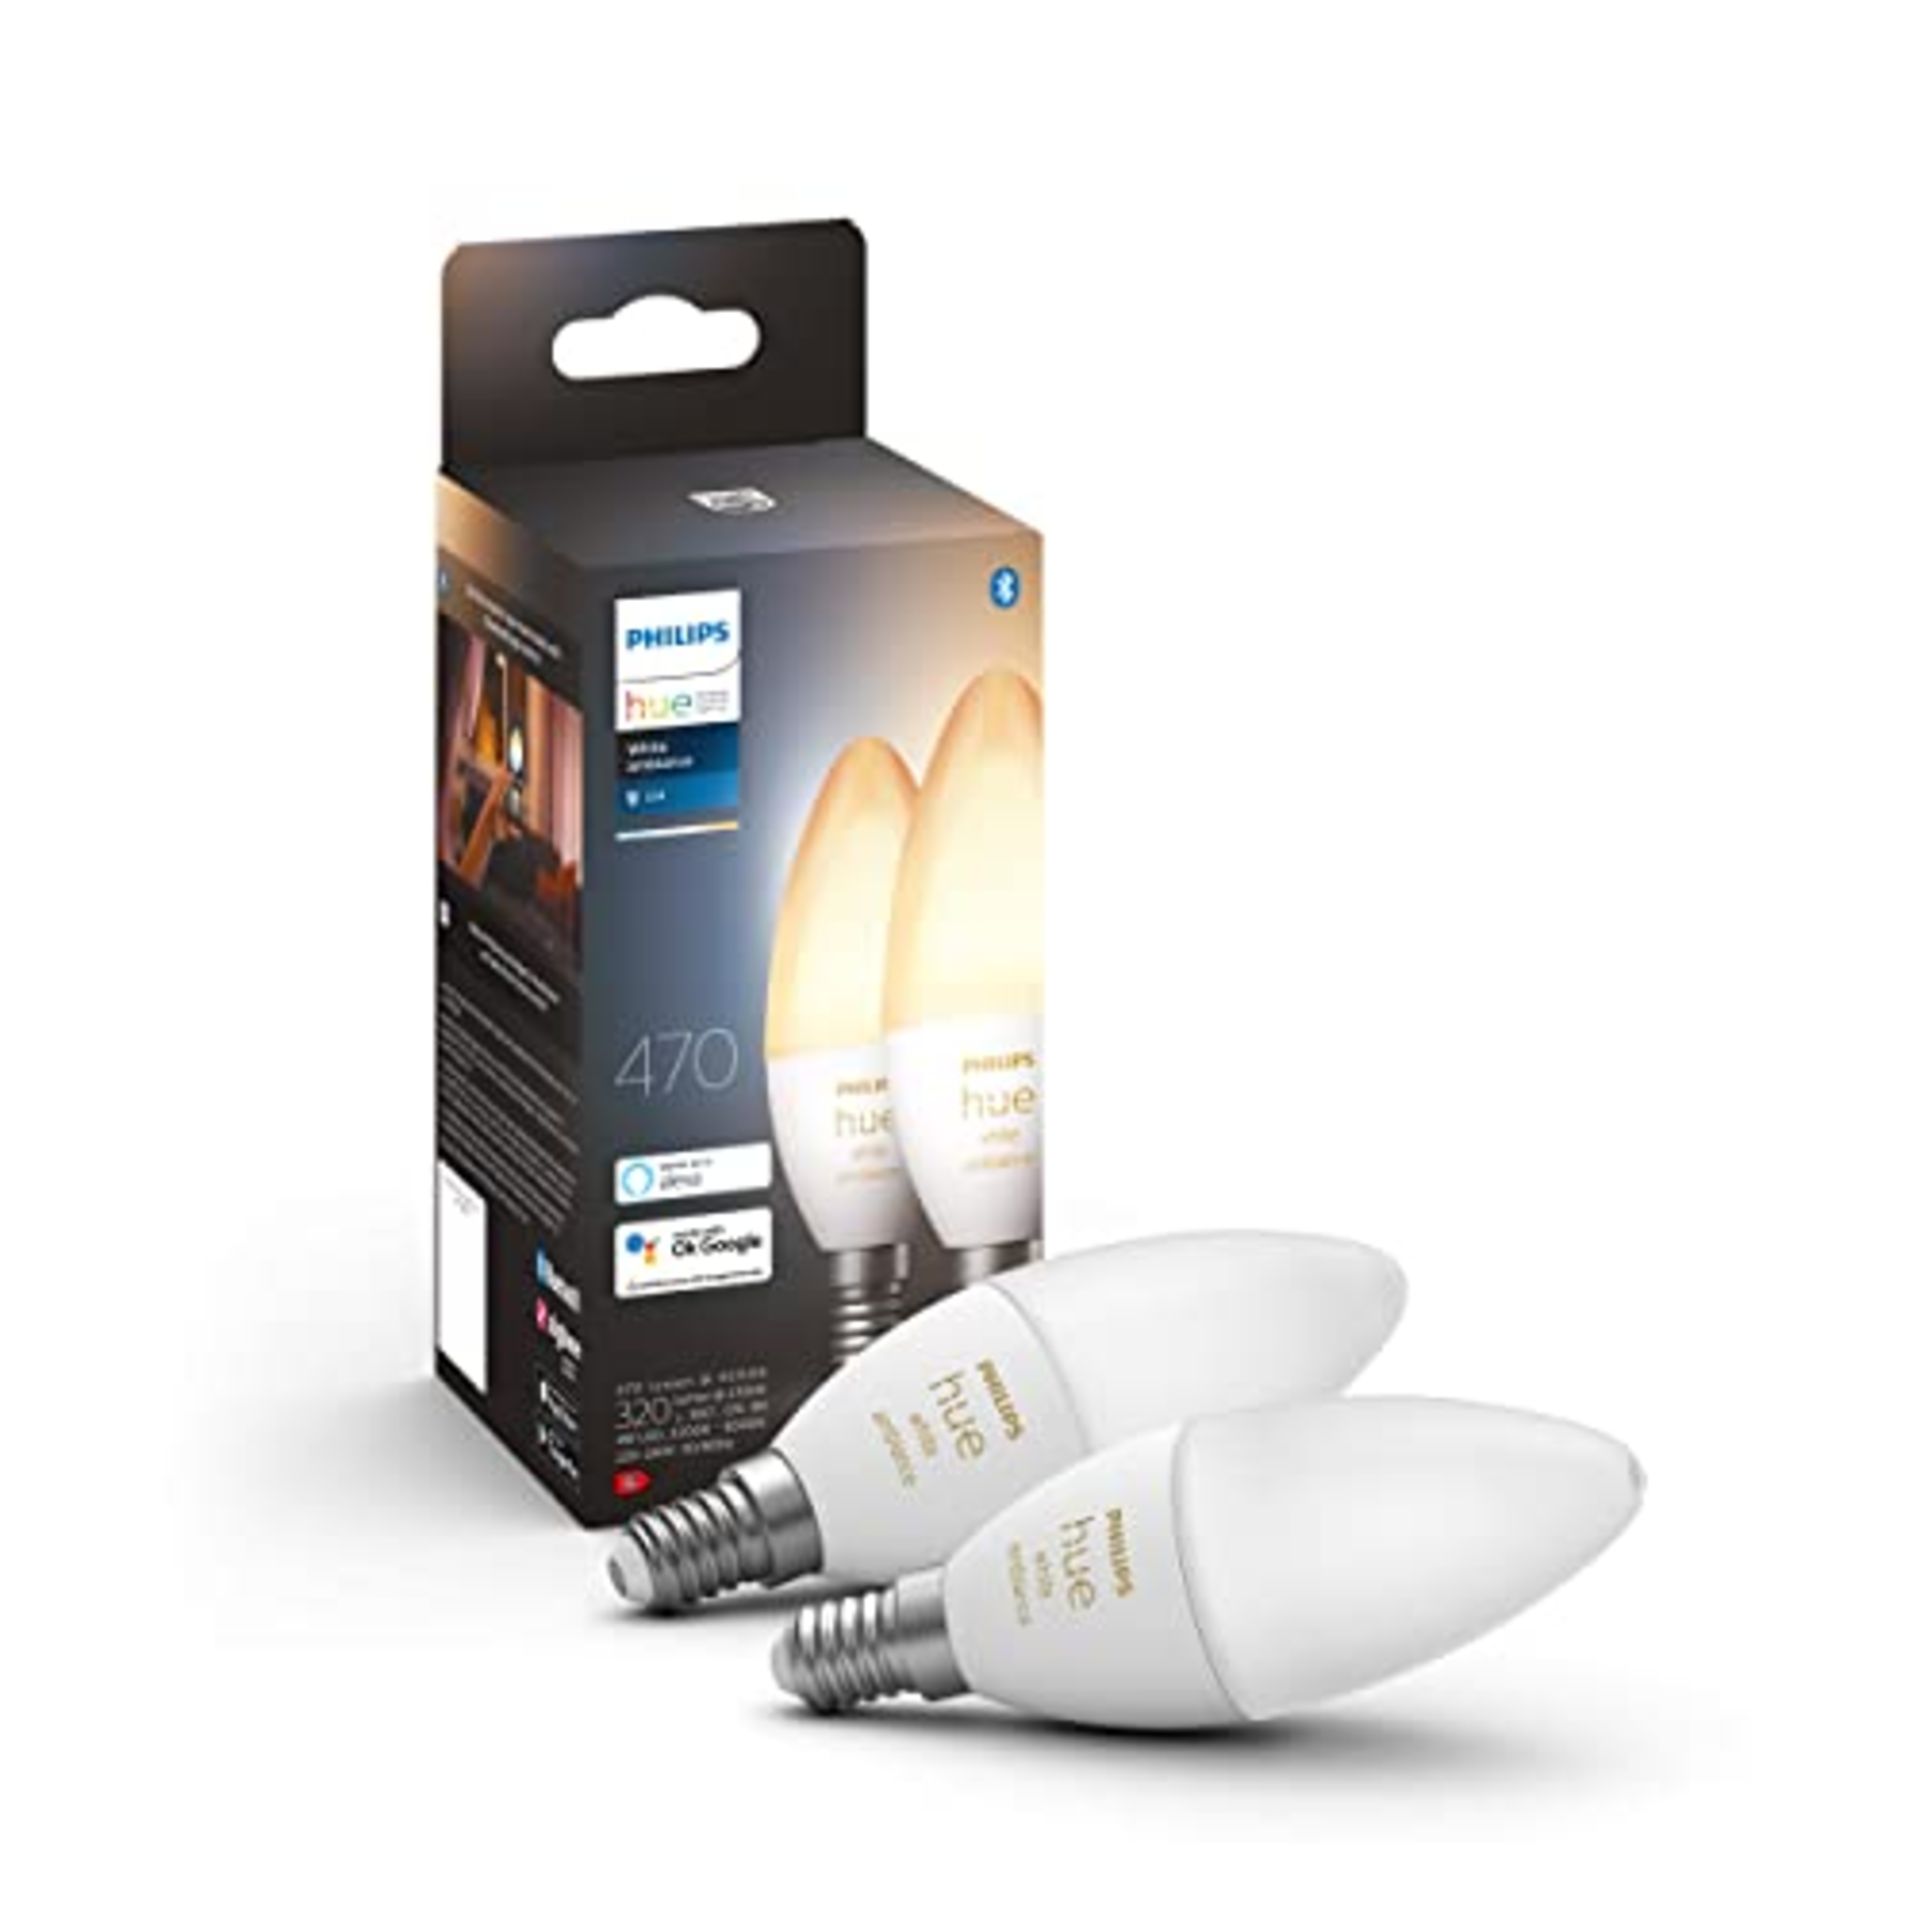 Philips Hue NEW White Ambiance Smart Light Bulb 2 Pack [E14 Small Edison Screw] Works